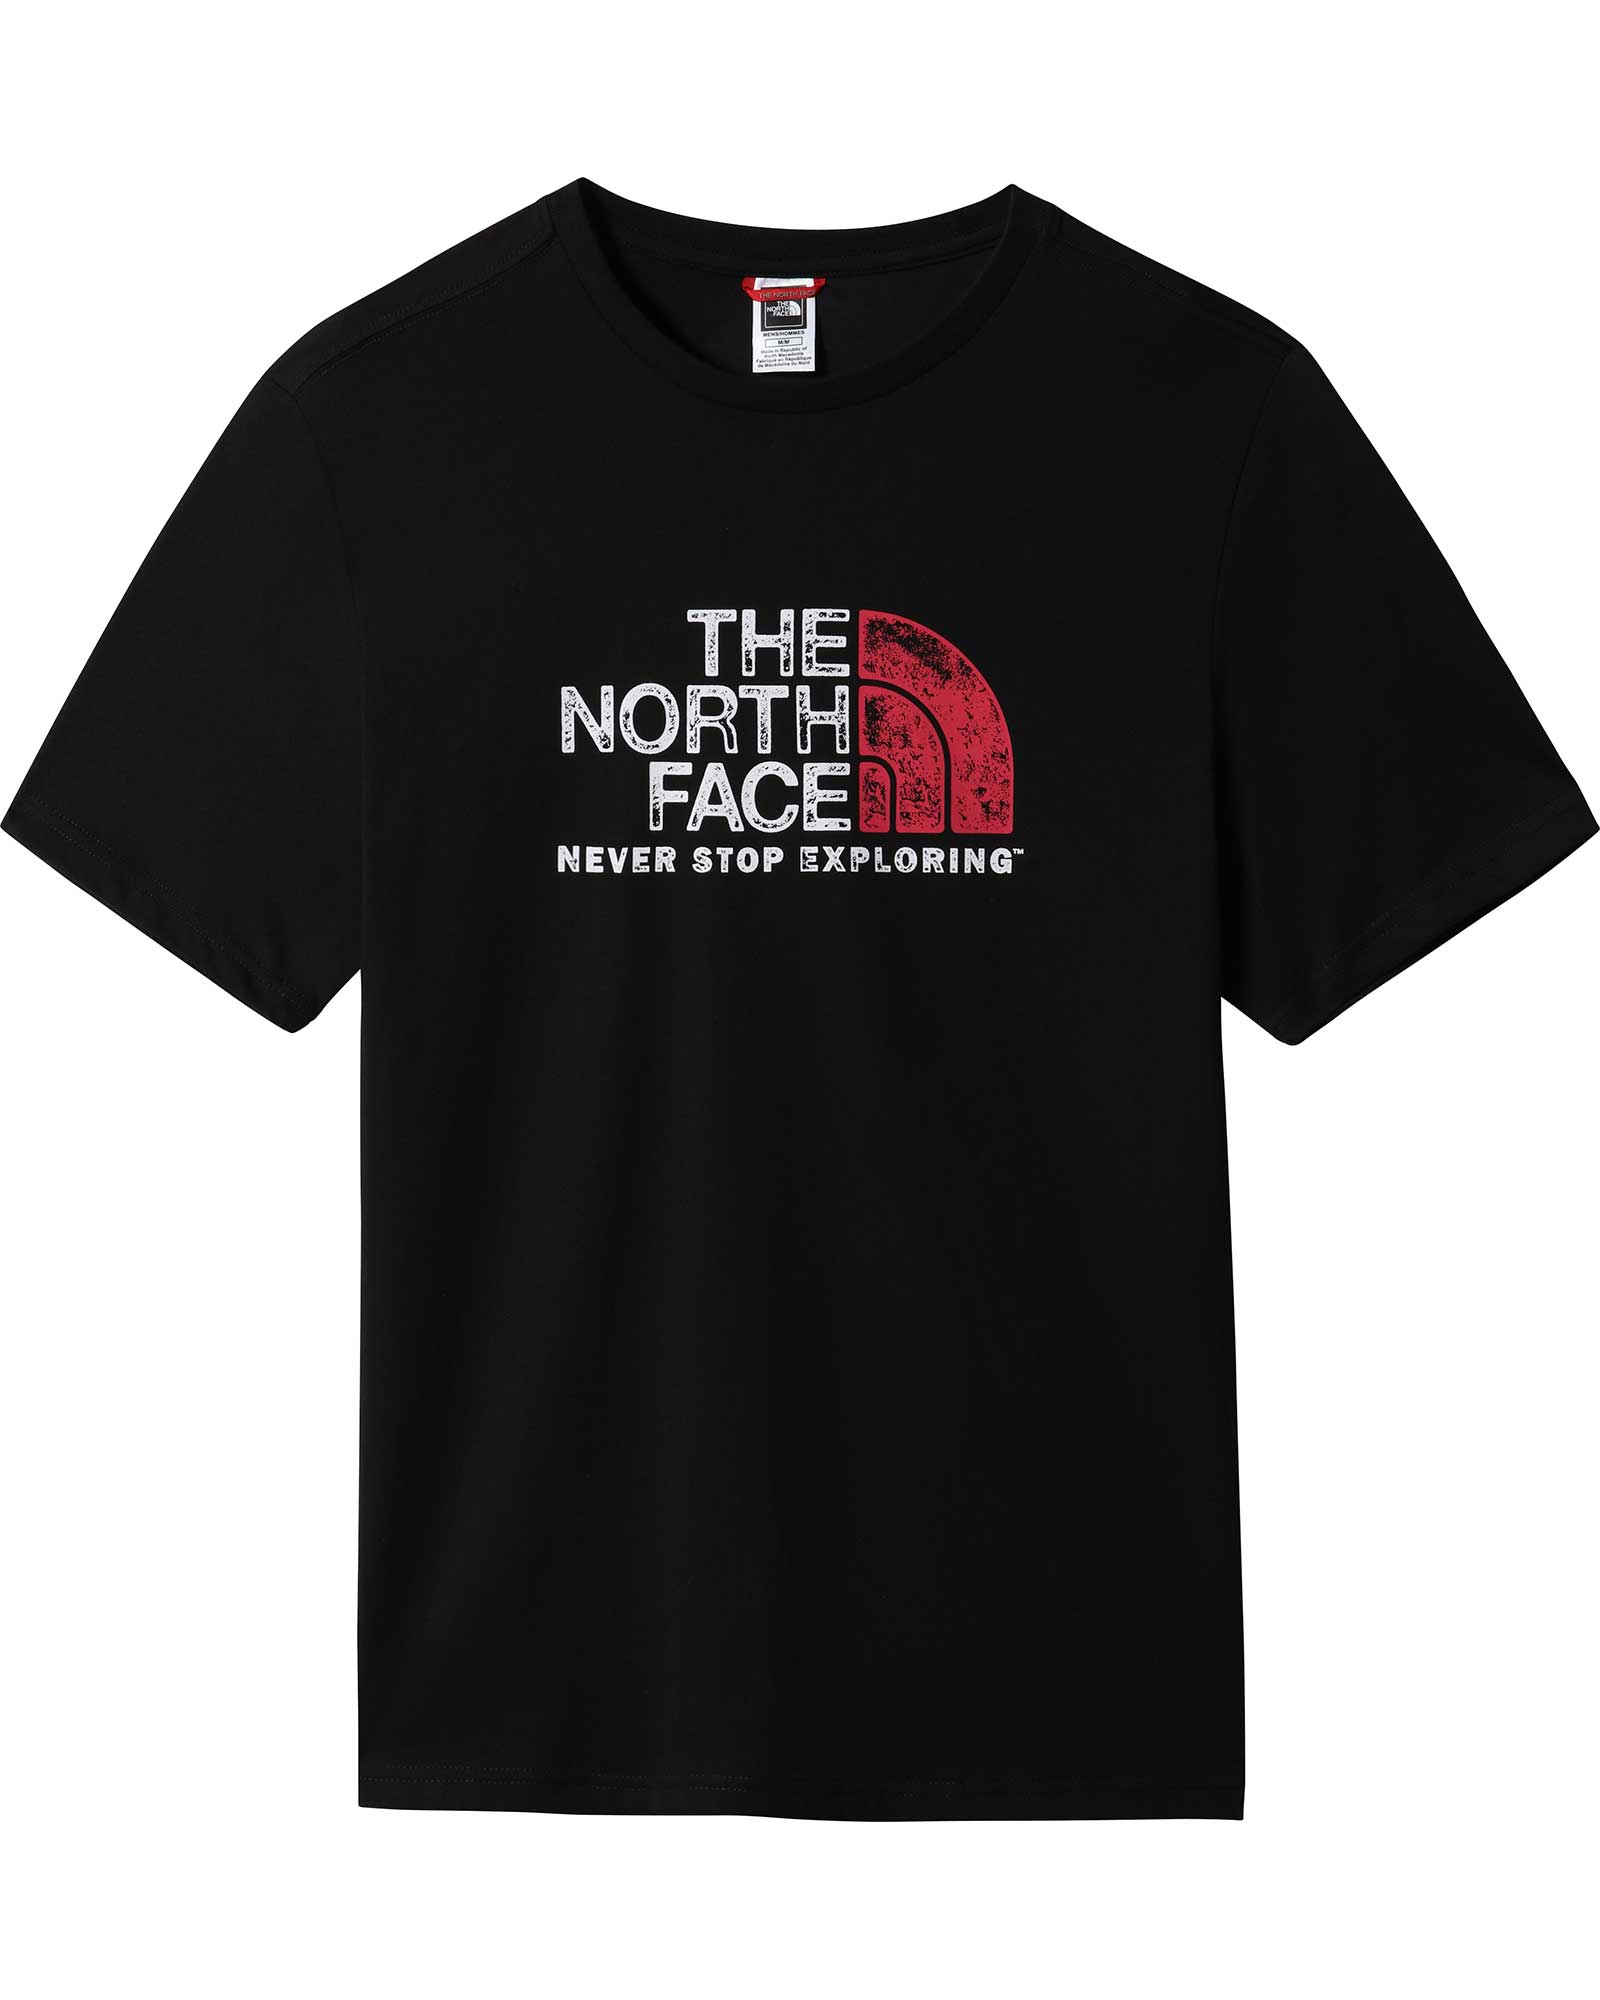 The North Face Rust Men's T-Shirt | Ellis Brigham